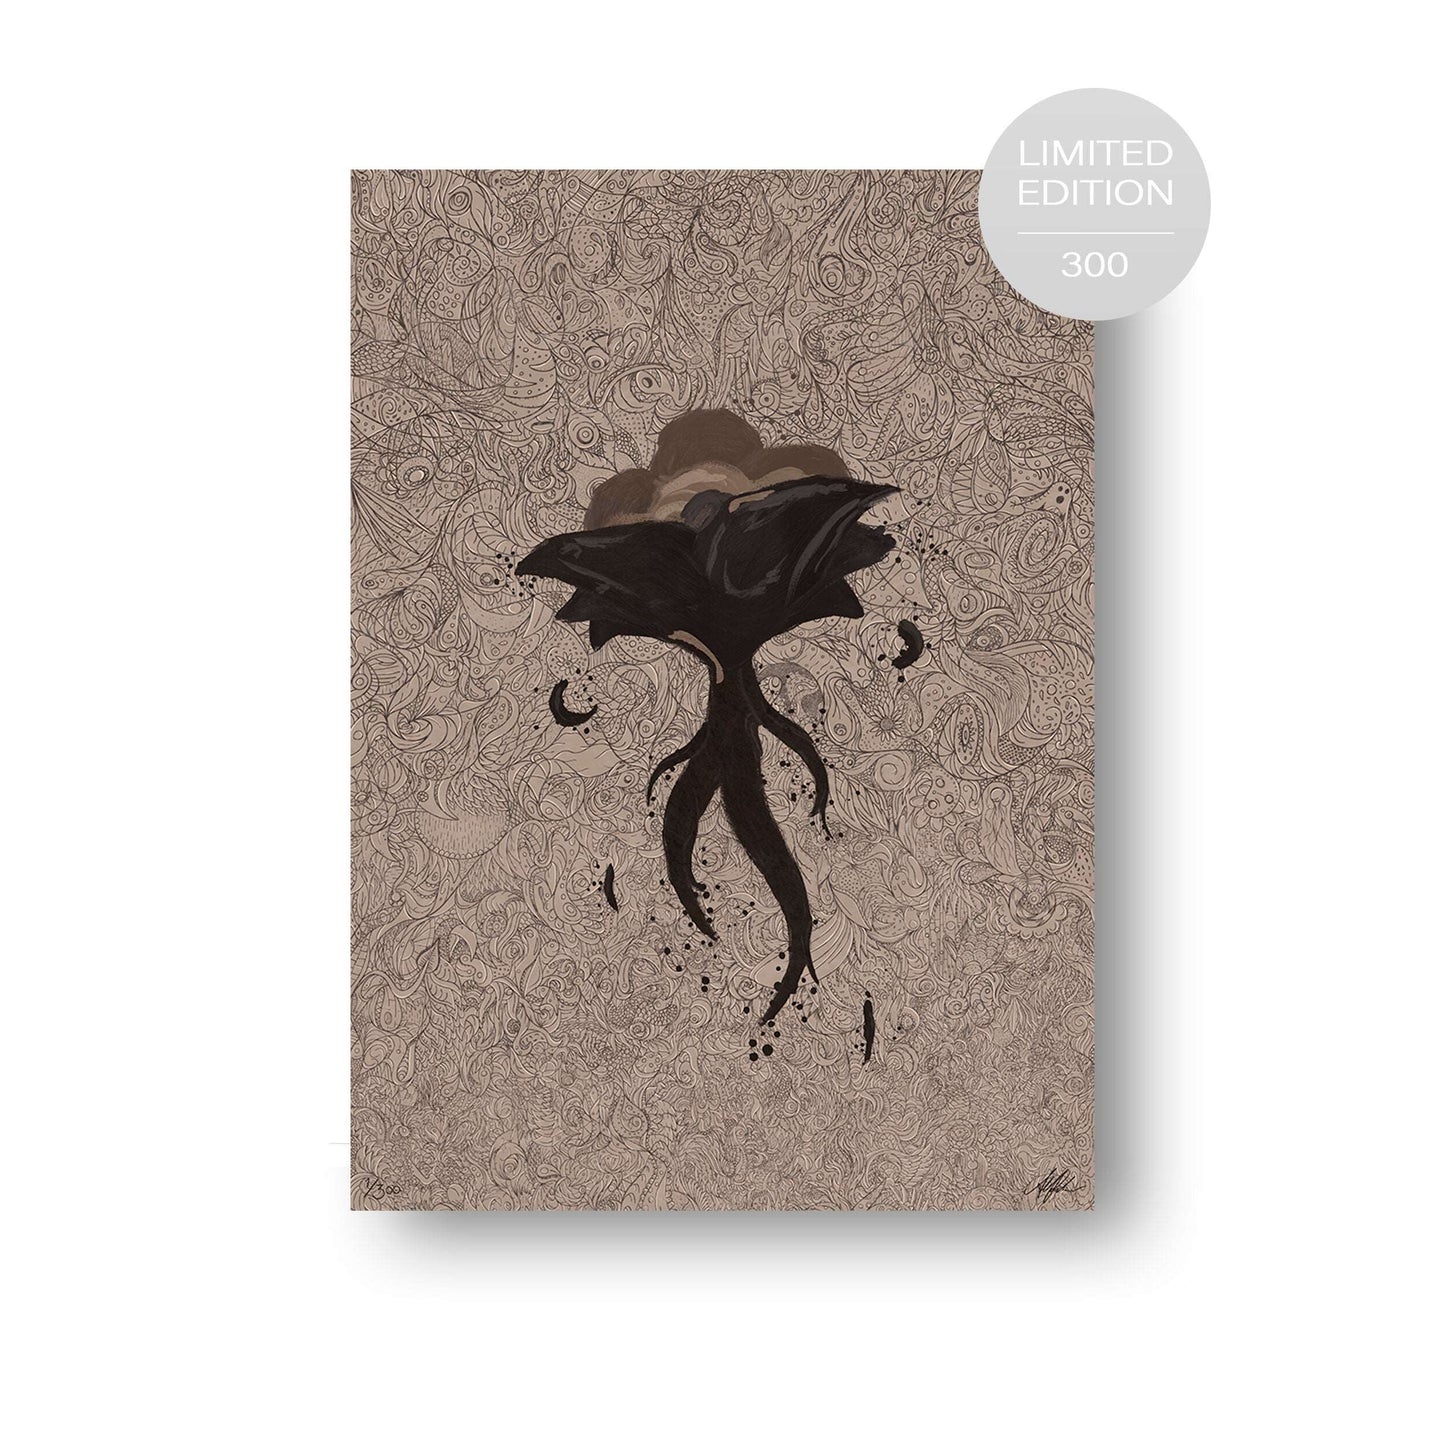 NOKUKO - art - Alan Pedersen - ALANTHEROCK - Limited edition - Grow - listen to you  - Flowering Hazel -  limited edition 300 print